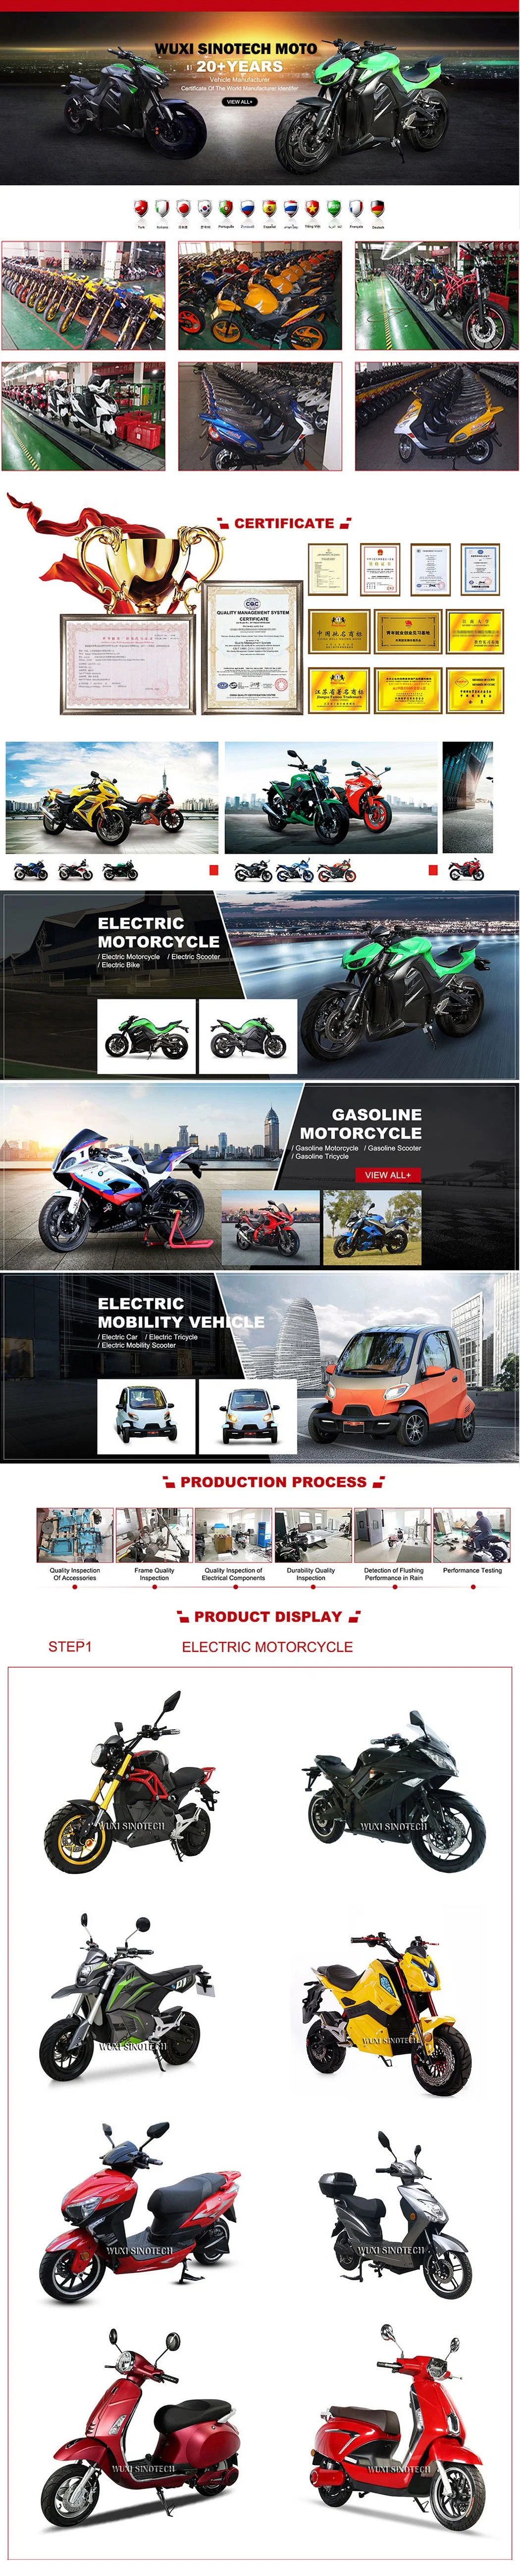 China Cheap High Quality 150cc 200cc 250cc 400cc Racing Motorcycles with Efi ABS